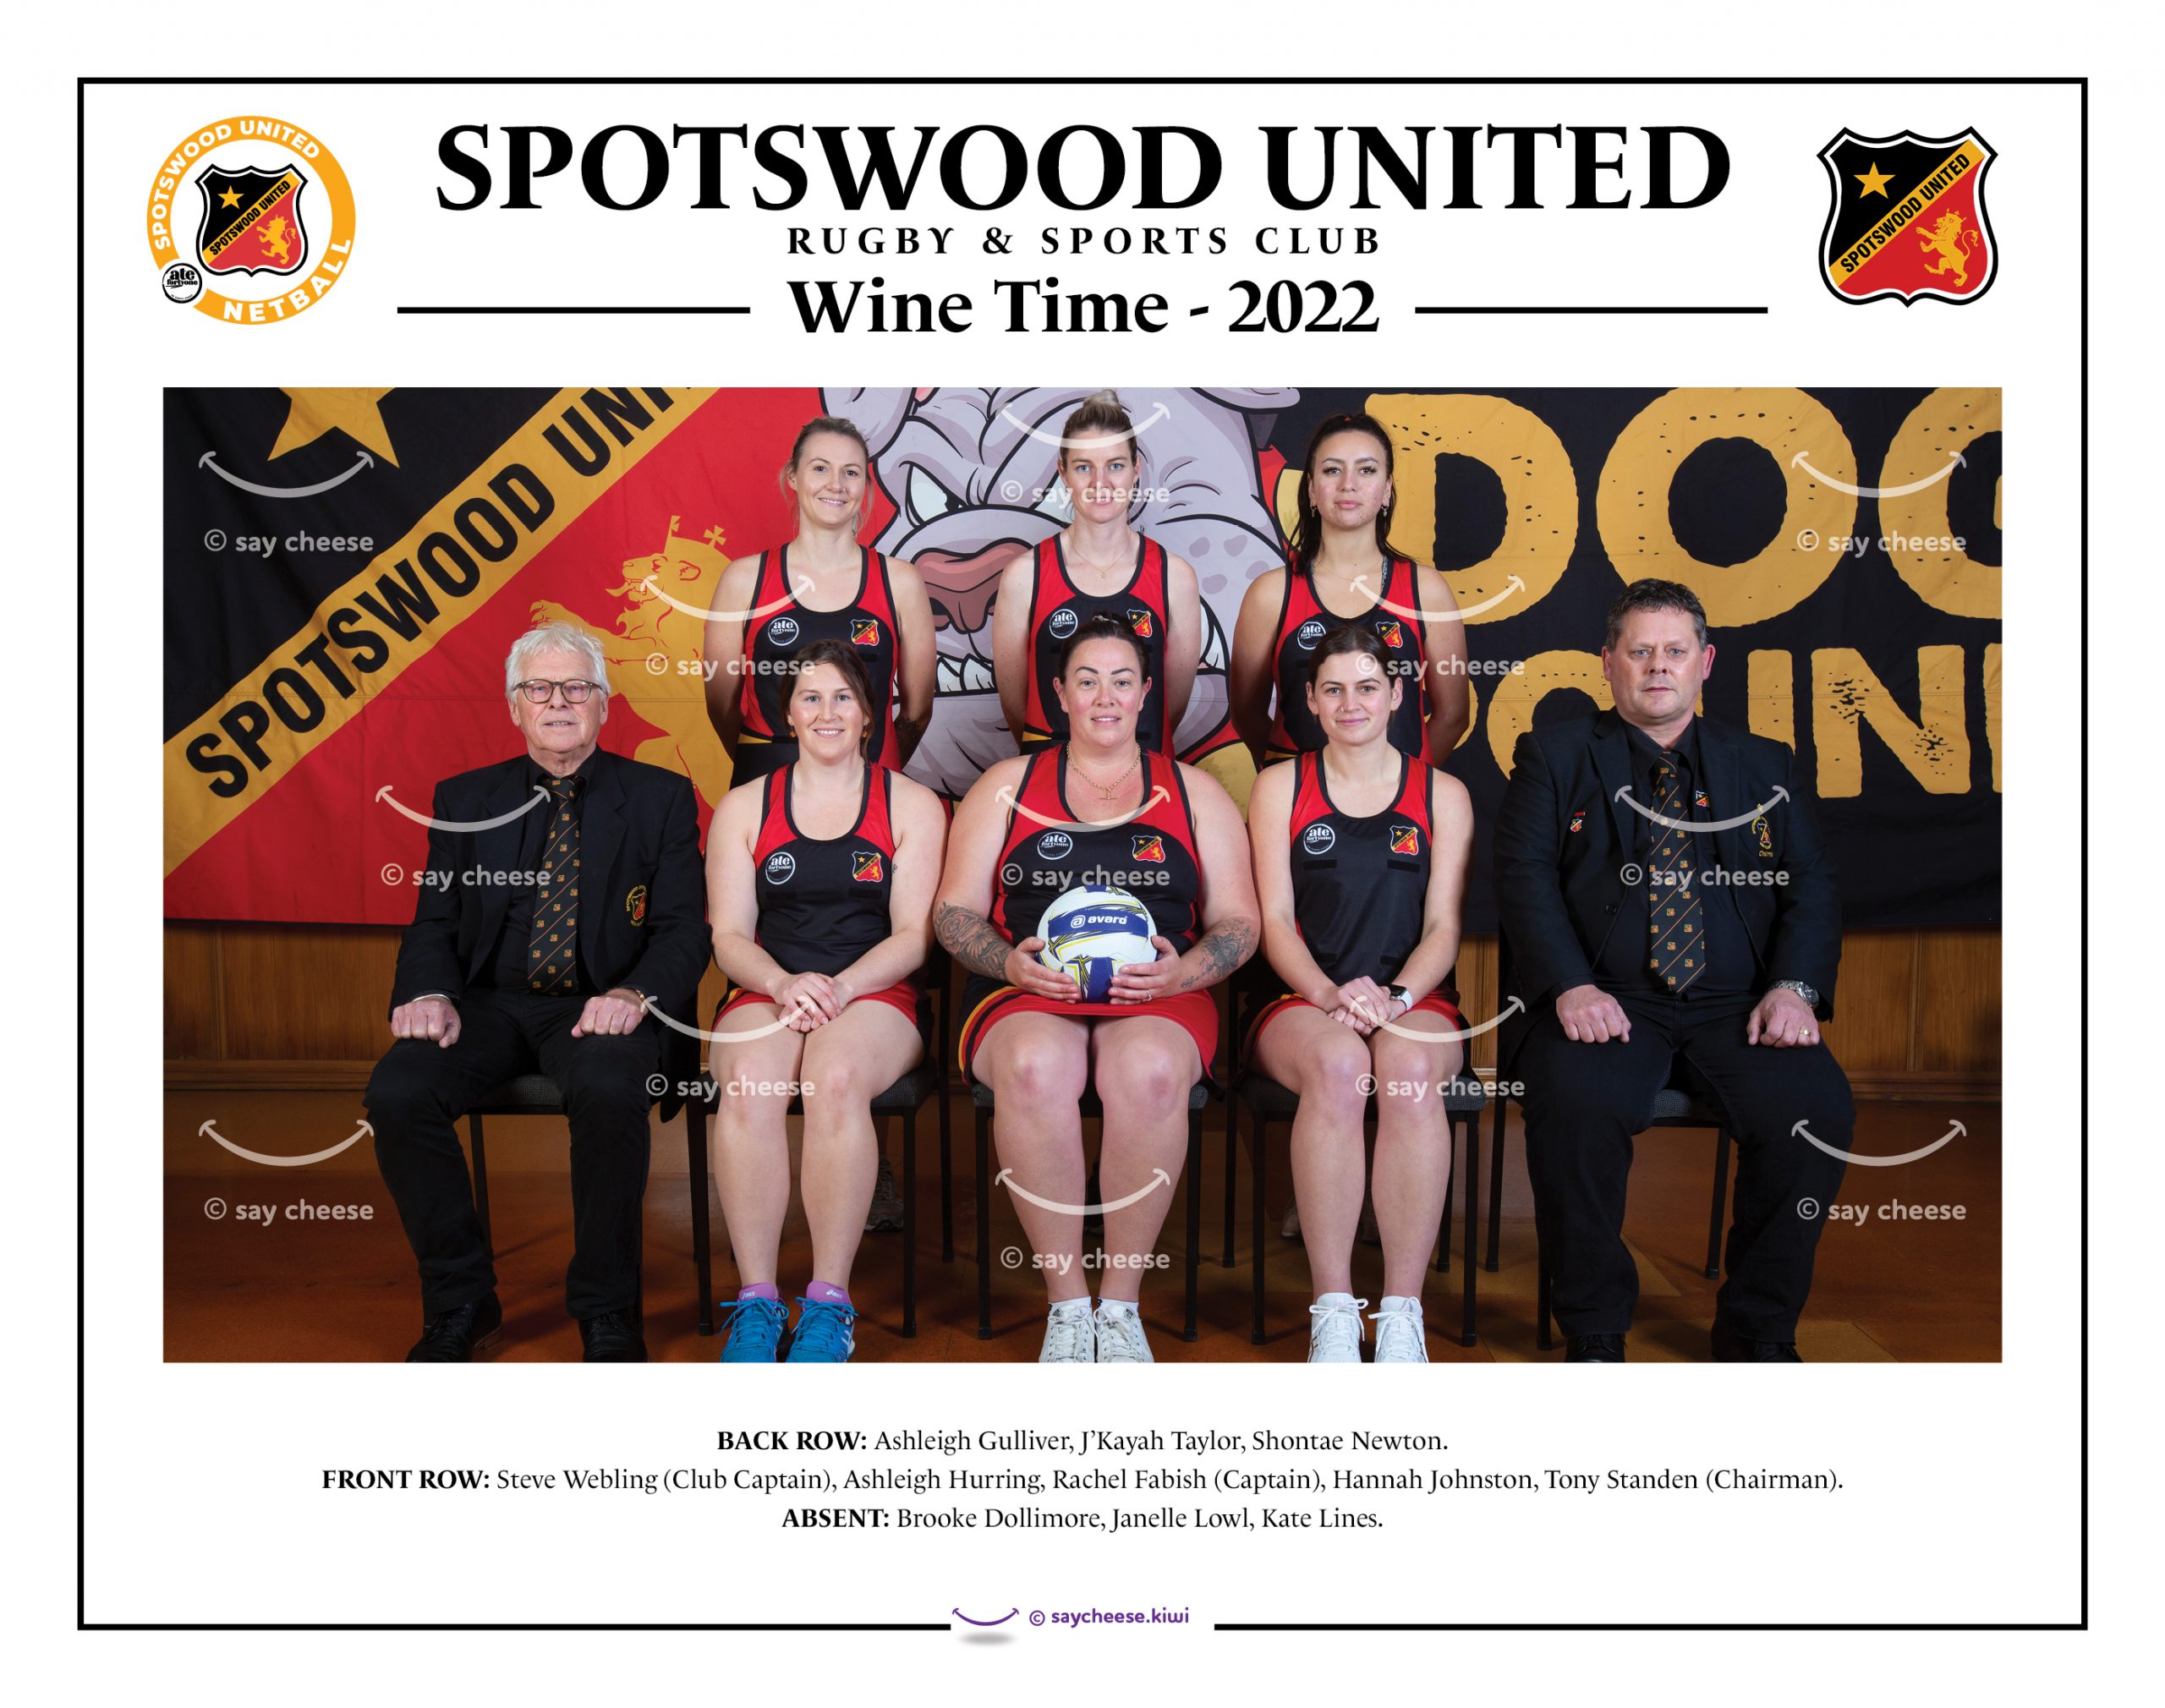 2022 Spotswood United Wine Time [2022SPOTNETWINE]